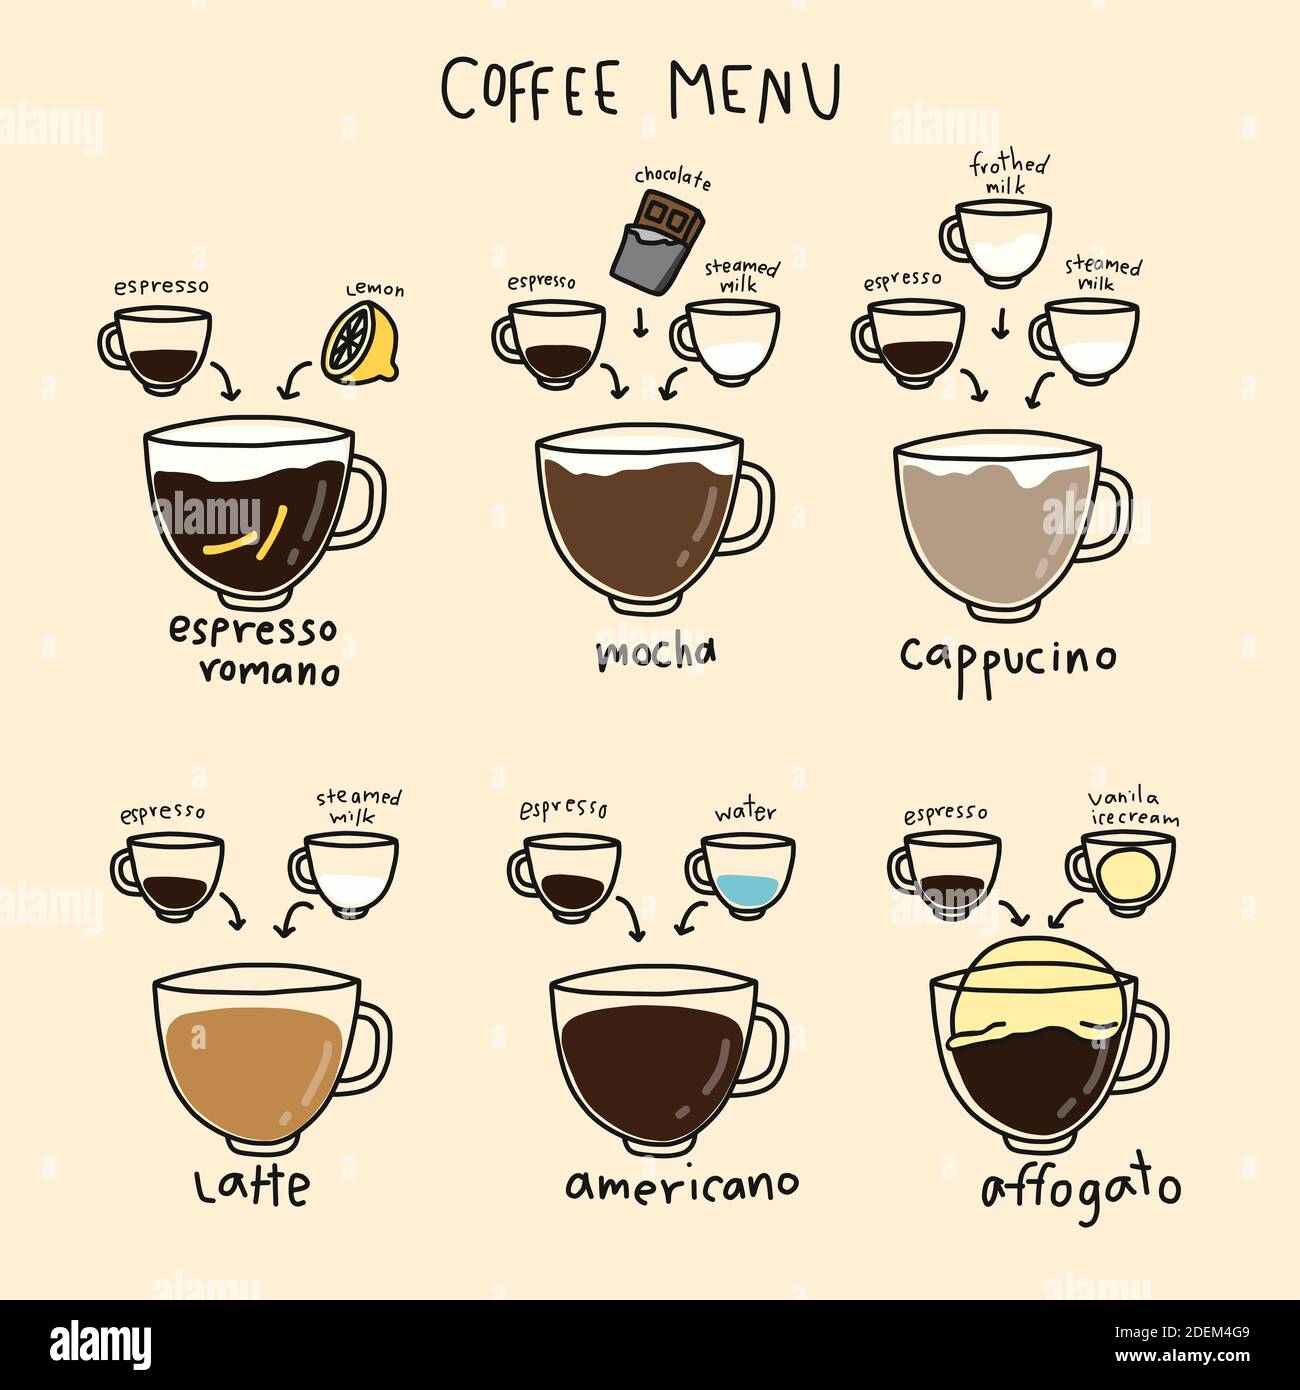 Coffee menu infographic cartoon vector illustration Stock Vector Image ...